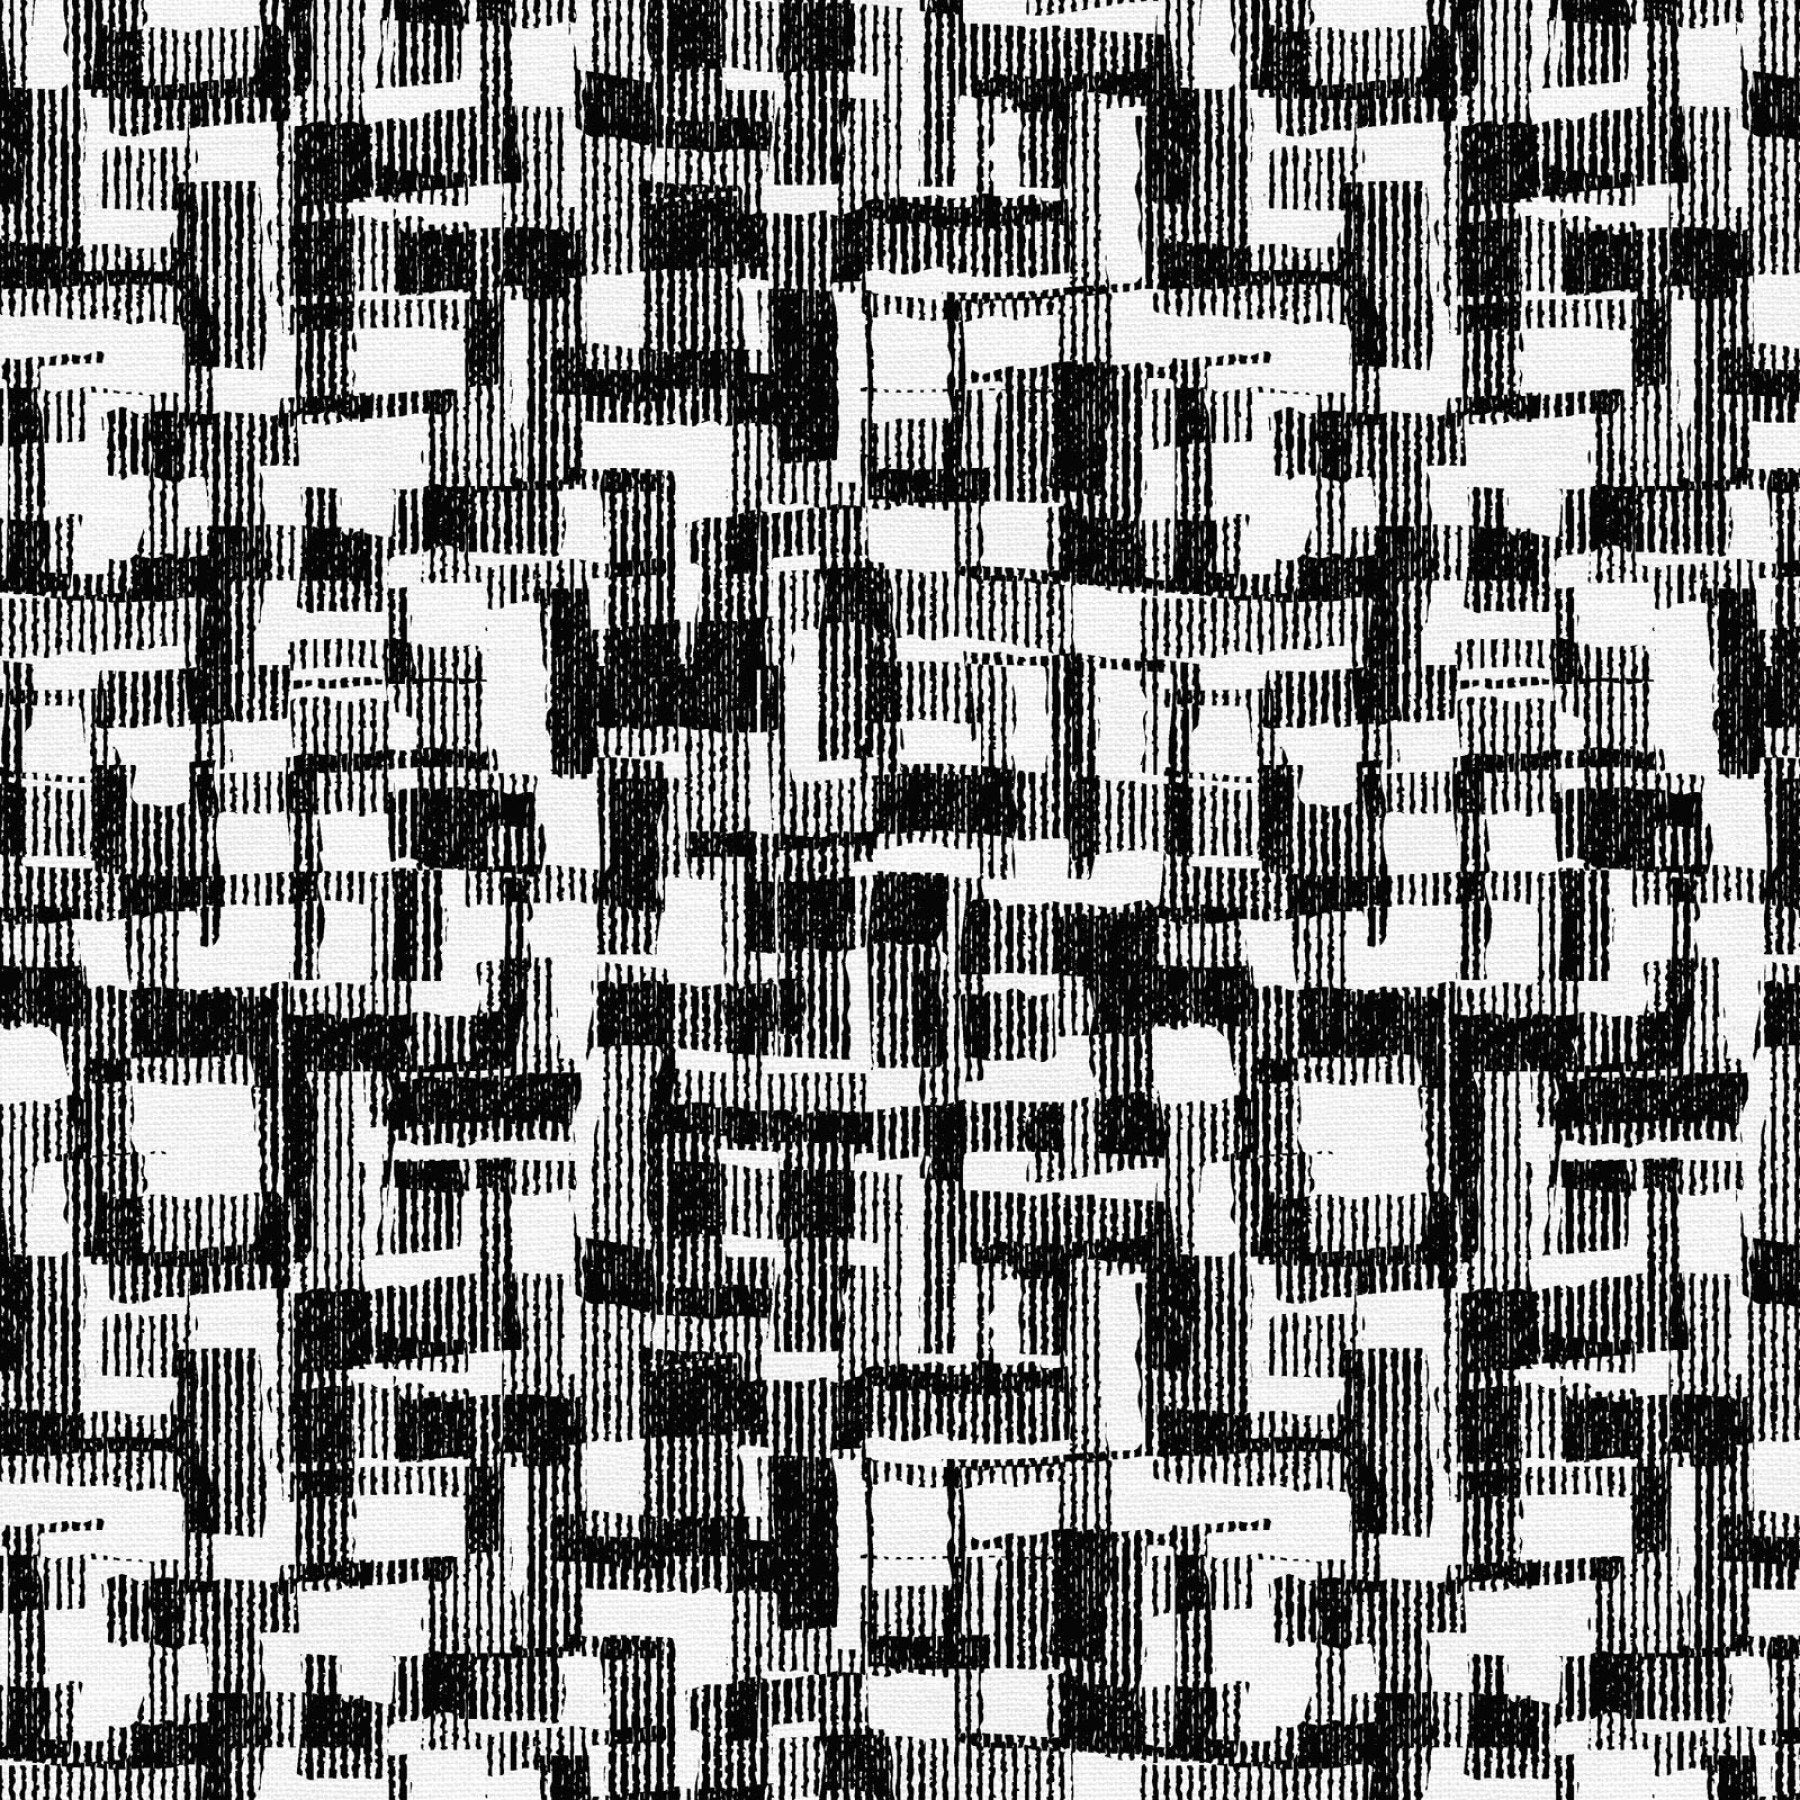 Black Barcodes Cotton Wideback Fabric Per Yard